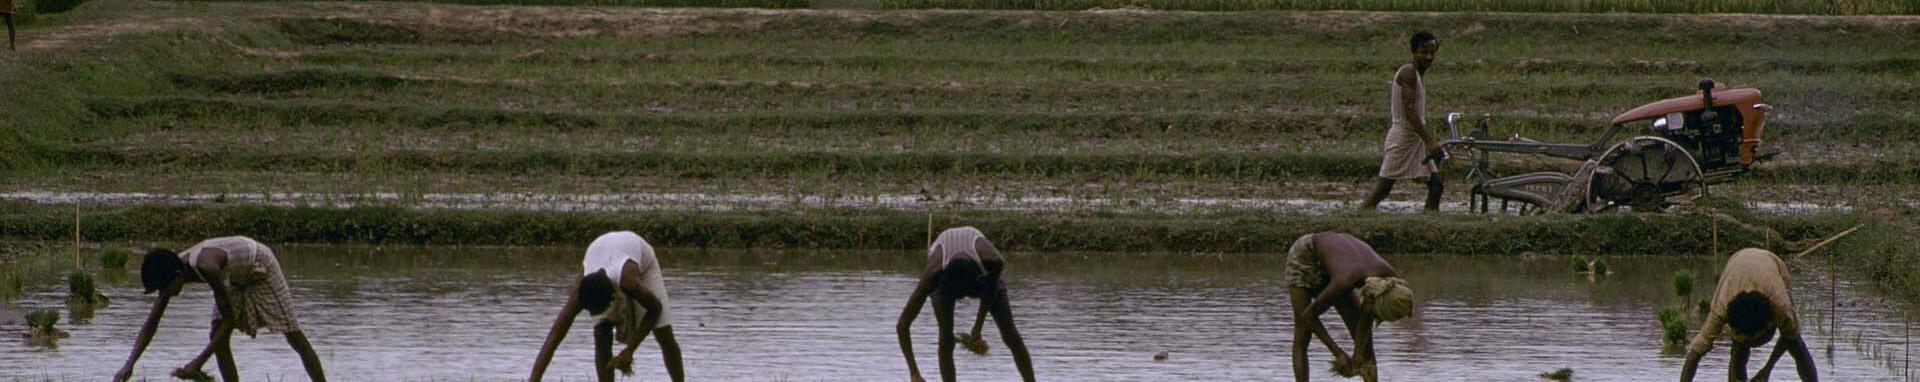 World Bank Photo Collection Planting rice Rice Fields. Bangladesh. Photo: Thomas Sennett / World Bank